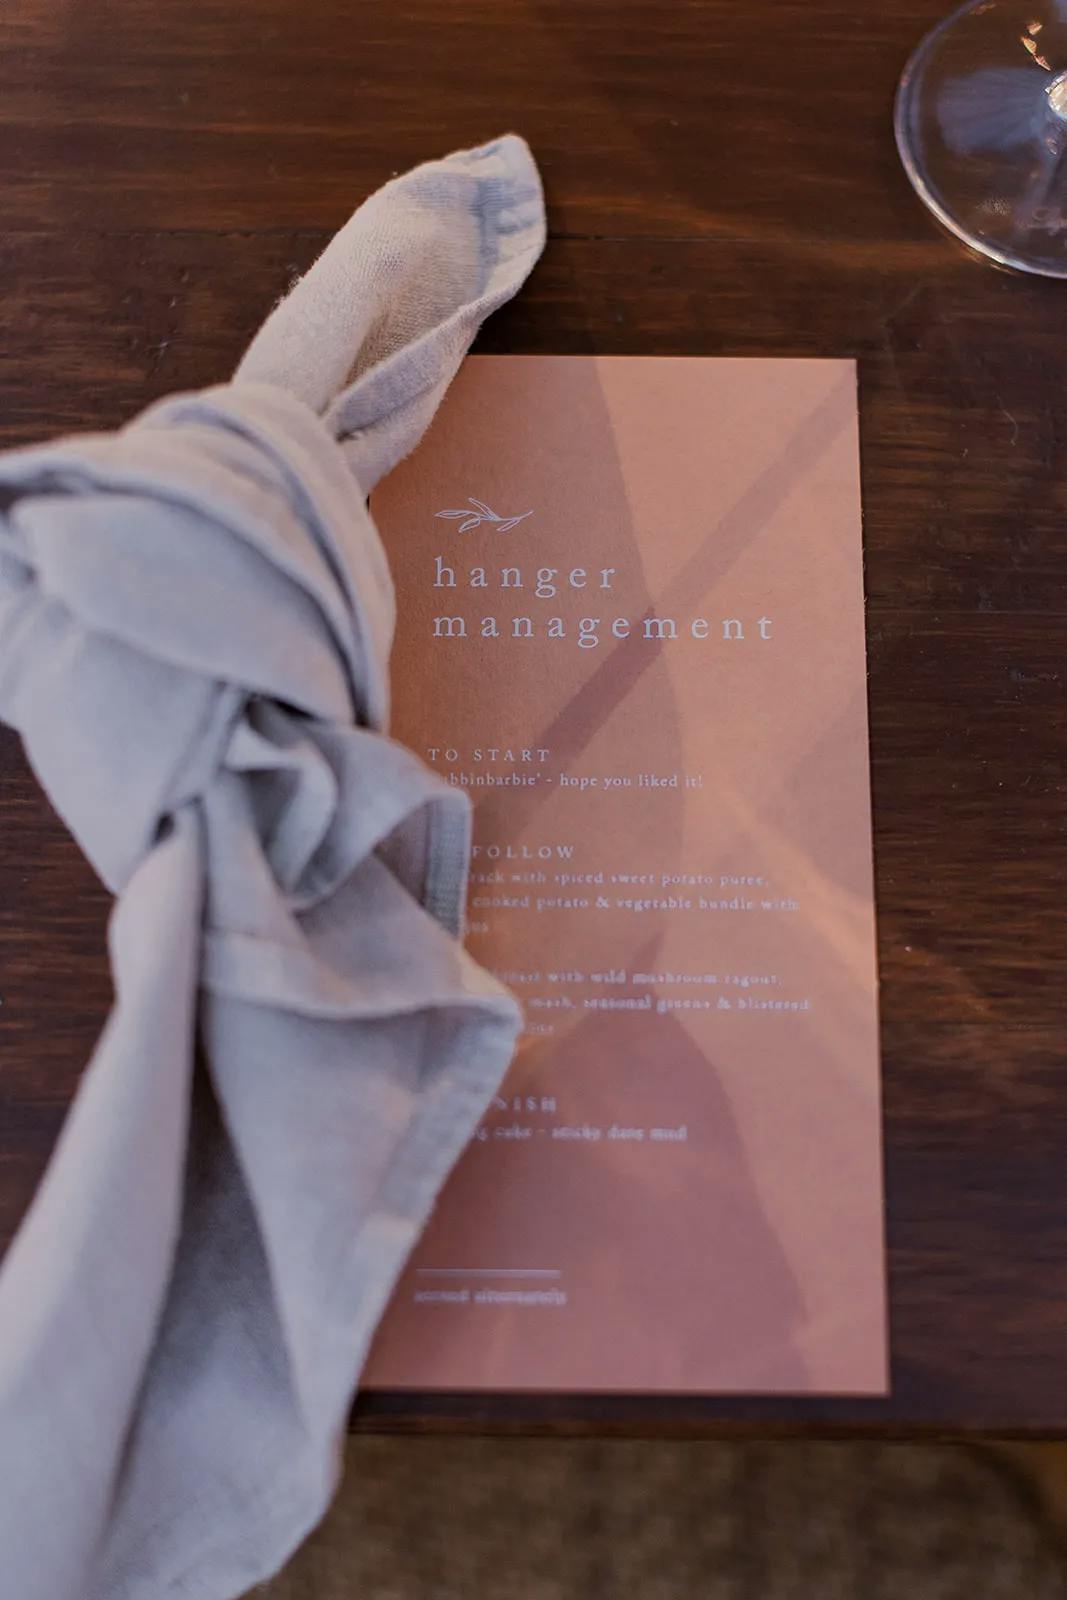 Wedding reception menus with napkin